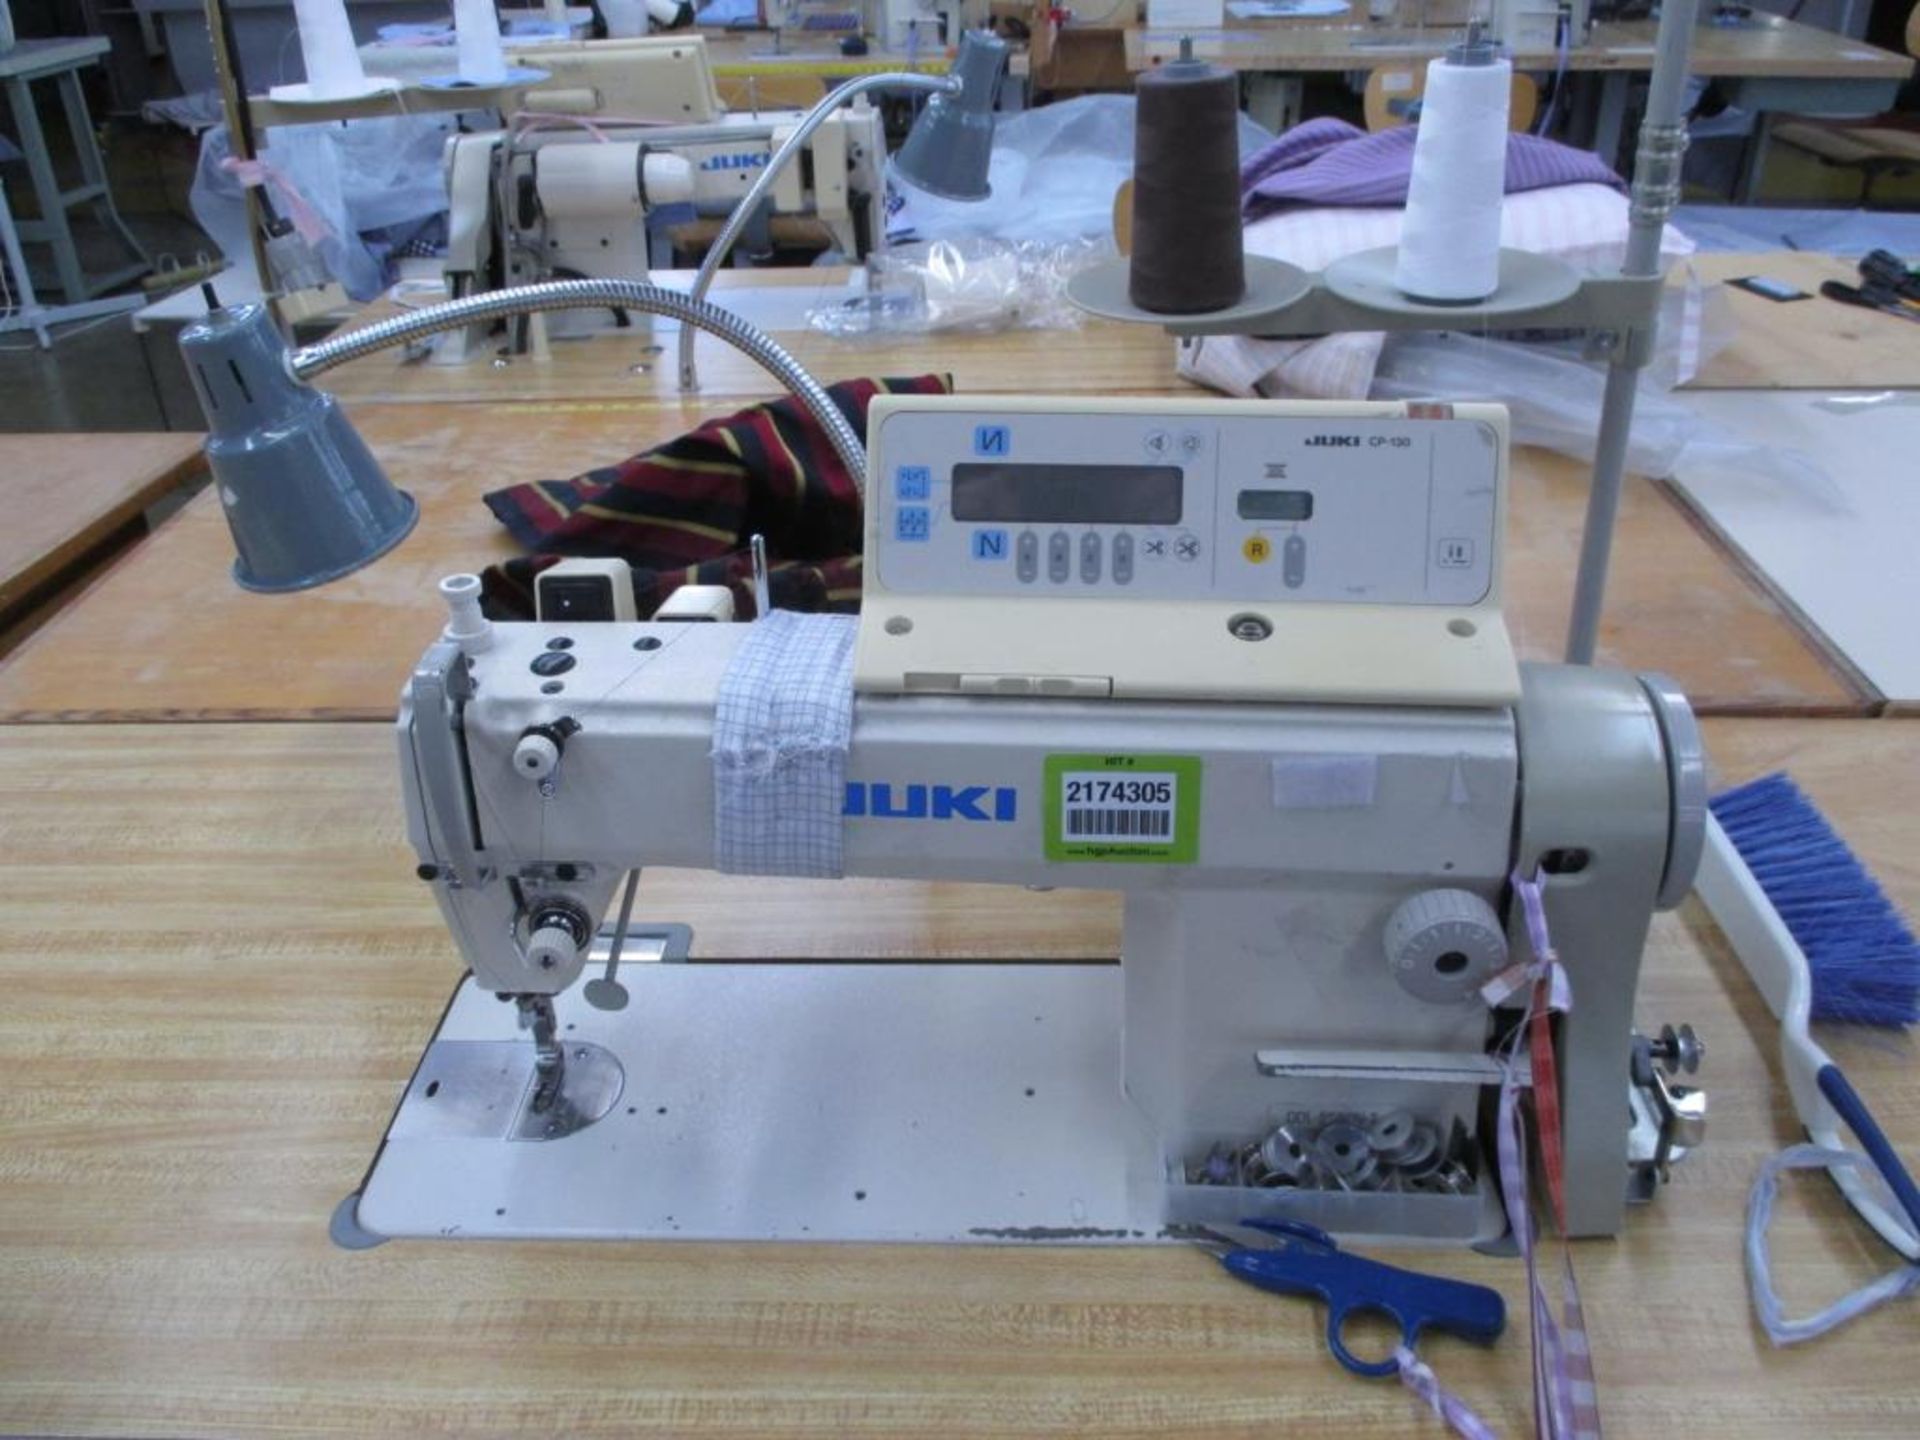 Lockstitch Reverse Industrial Sewing Machine. Juki DDL-5550N-7 1-Needle Lockstitch Reverse - Image 2 of 7